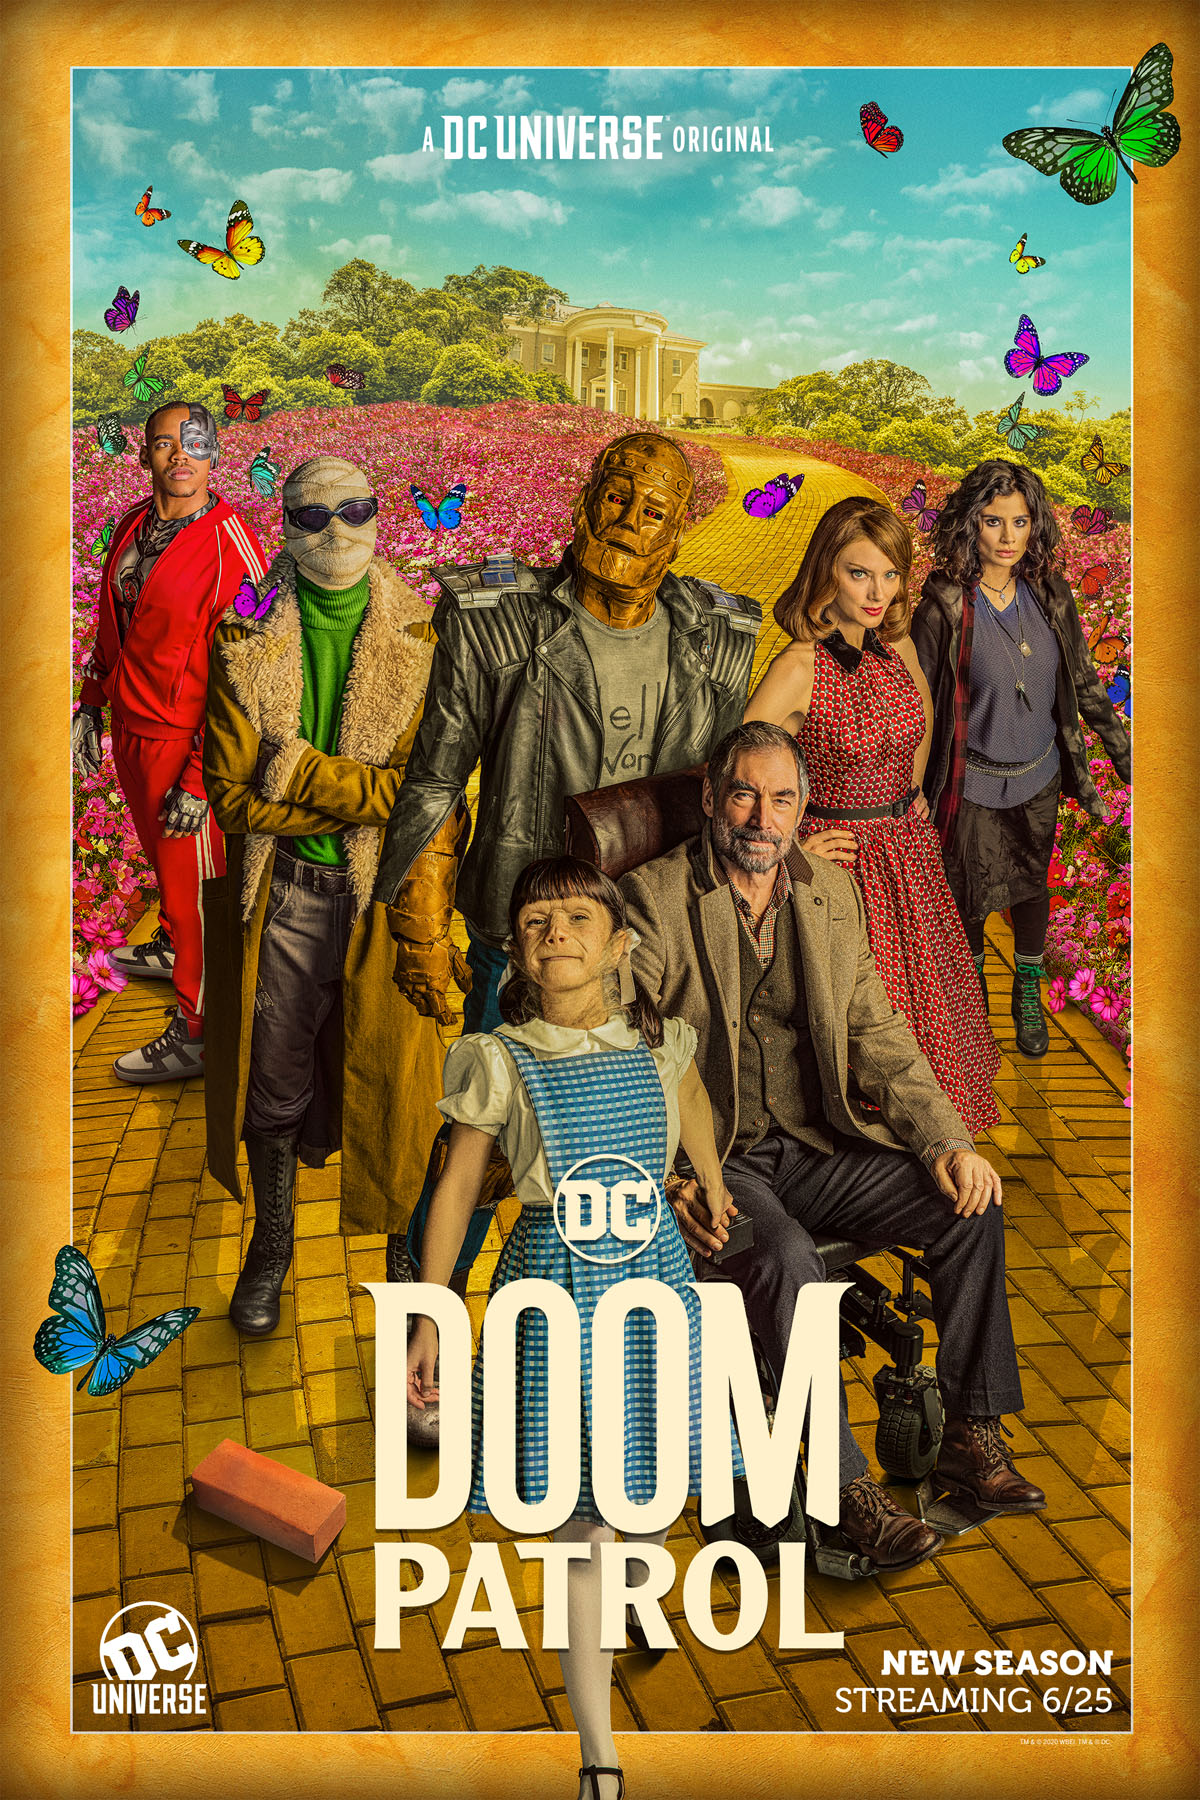 New Doom Patrol Season 2 Poster Sends the Team Down the